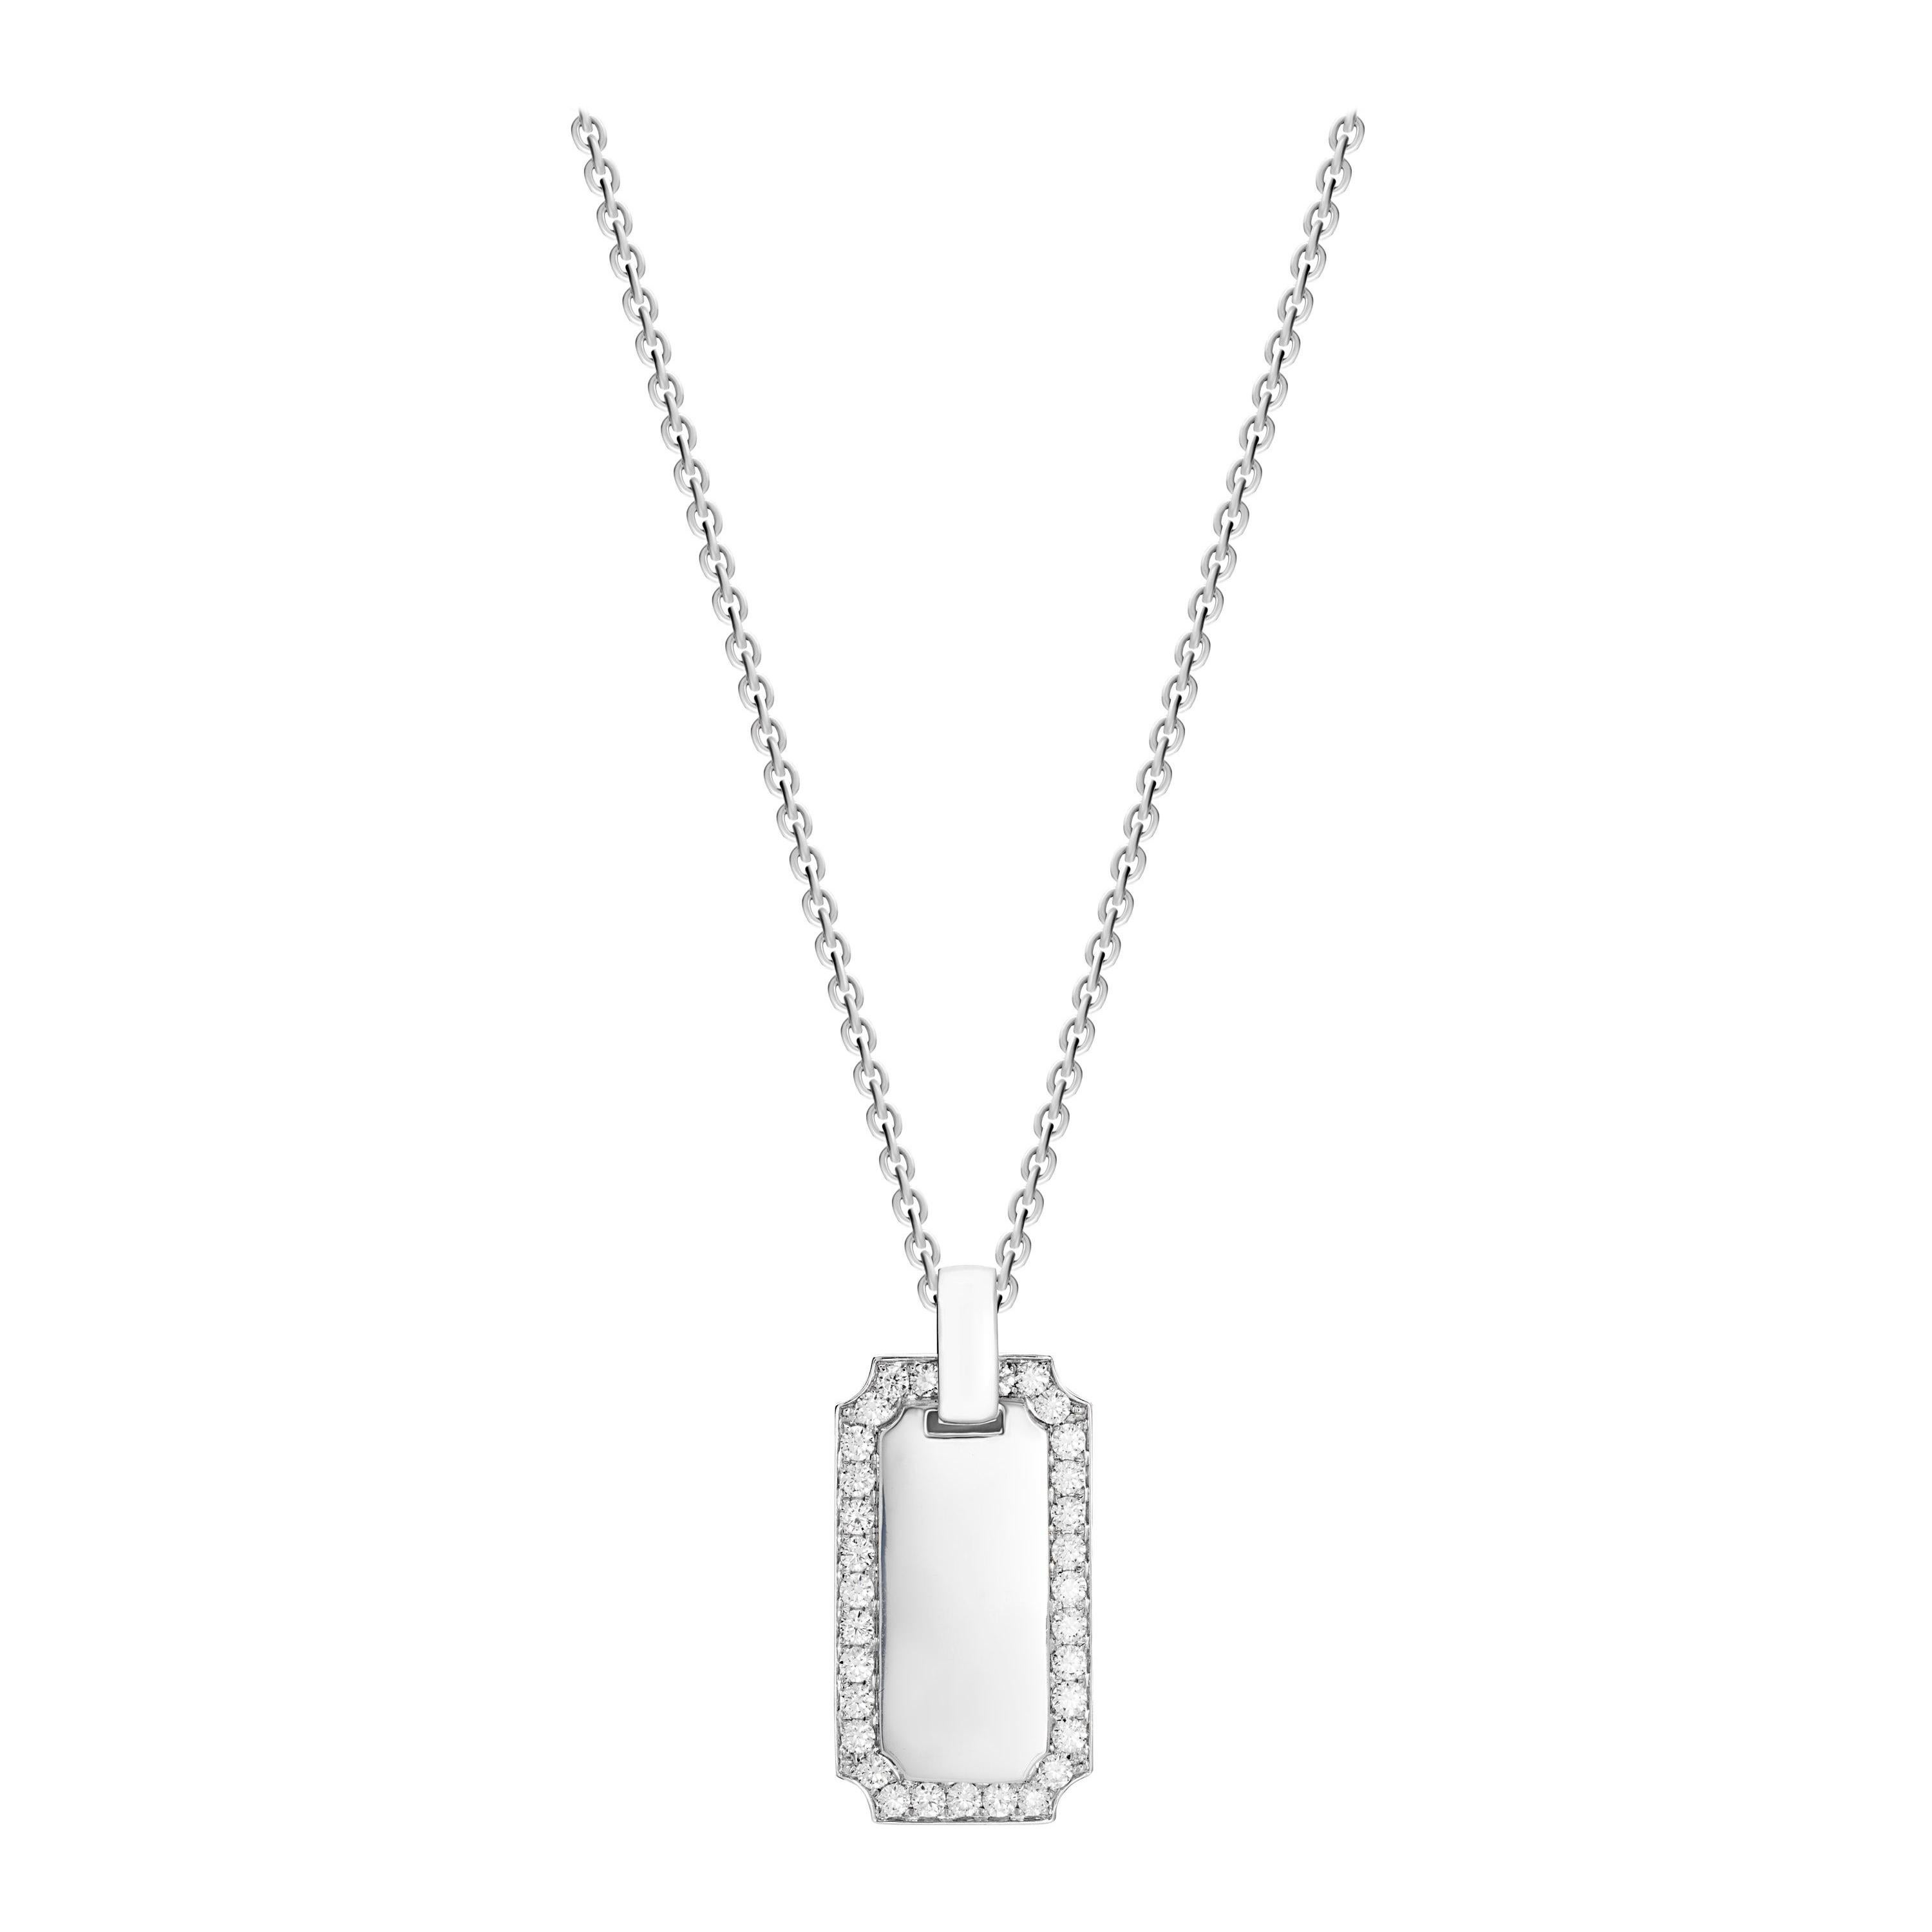 1.34 Carat Diamond 18 Karat Solid White Gold I.D. Tag Pendant Necklace For Sale